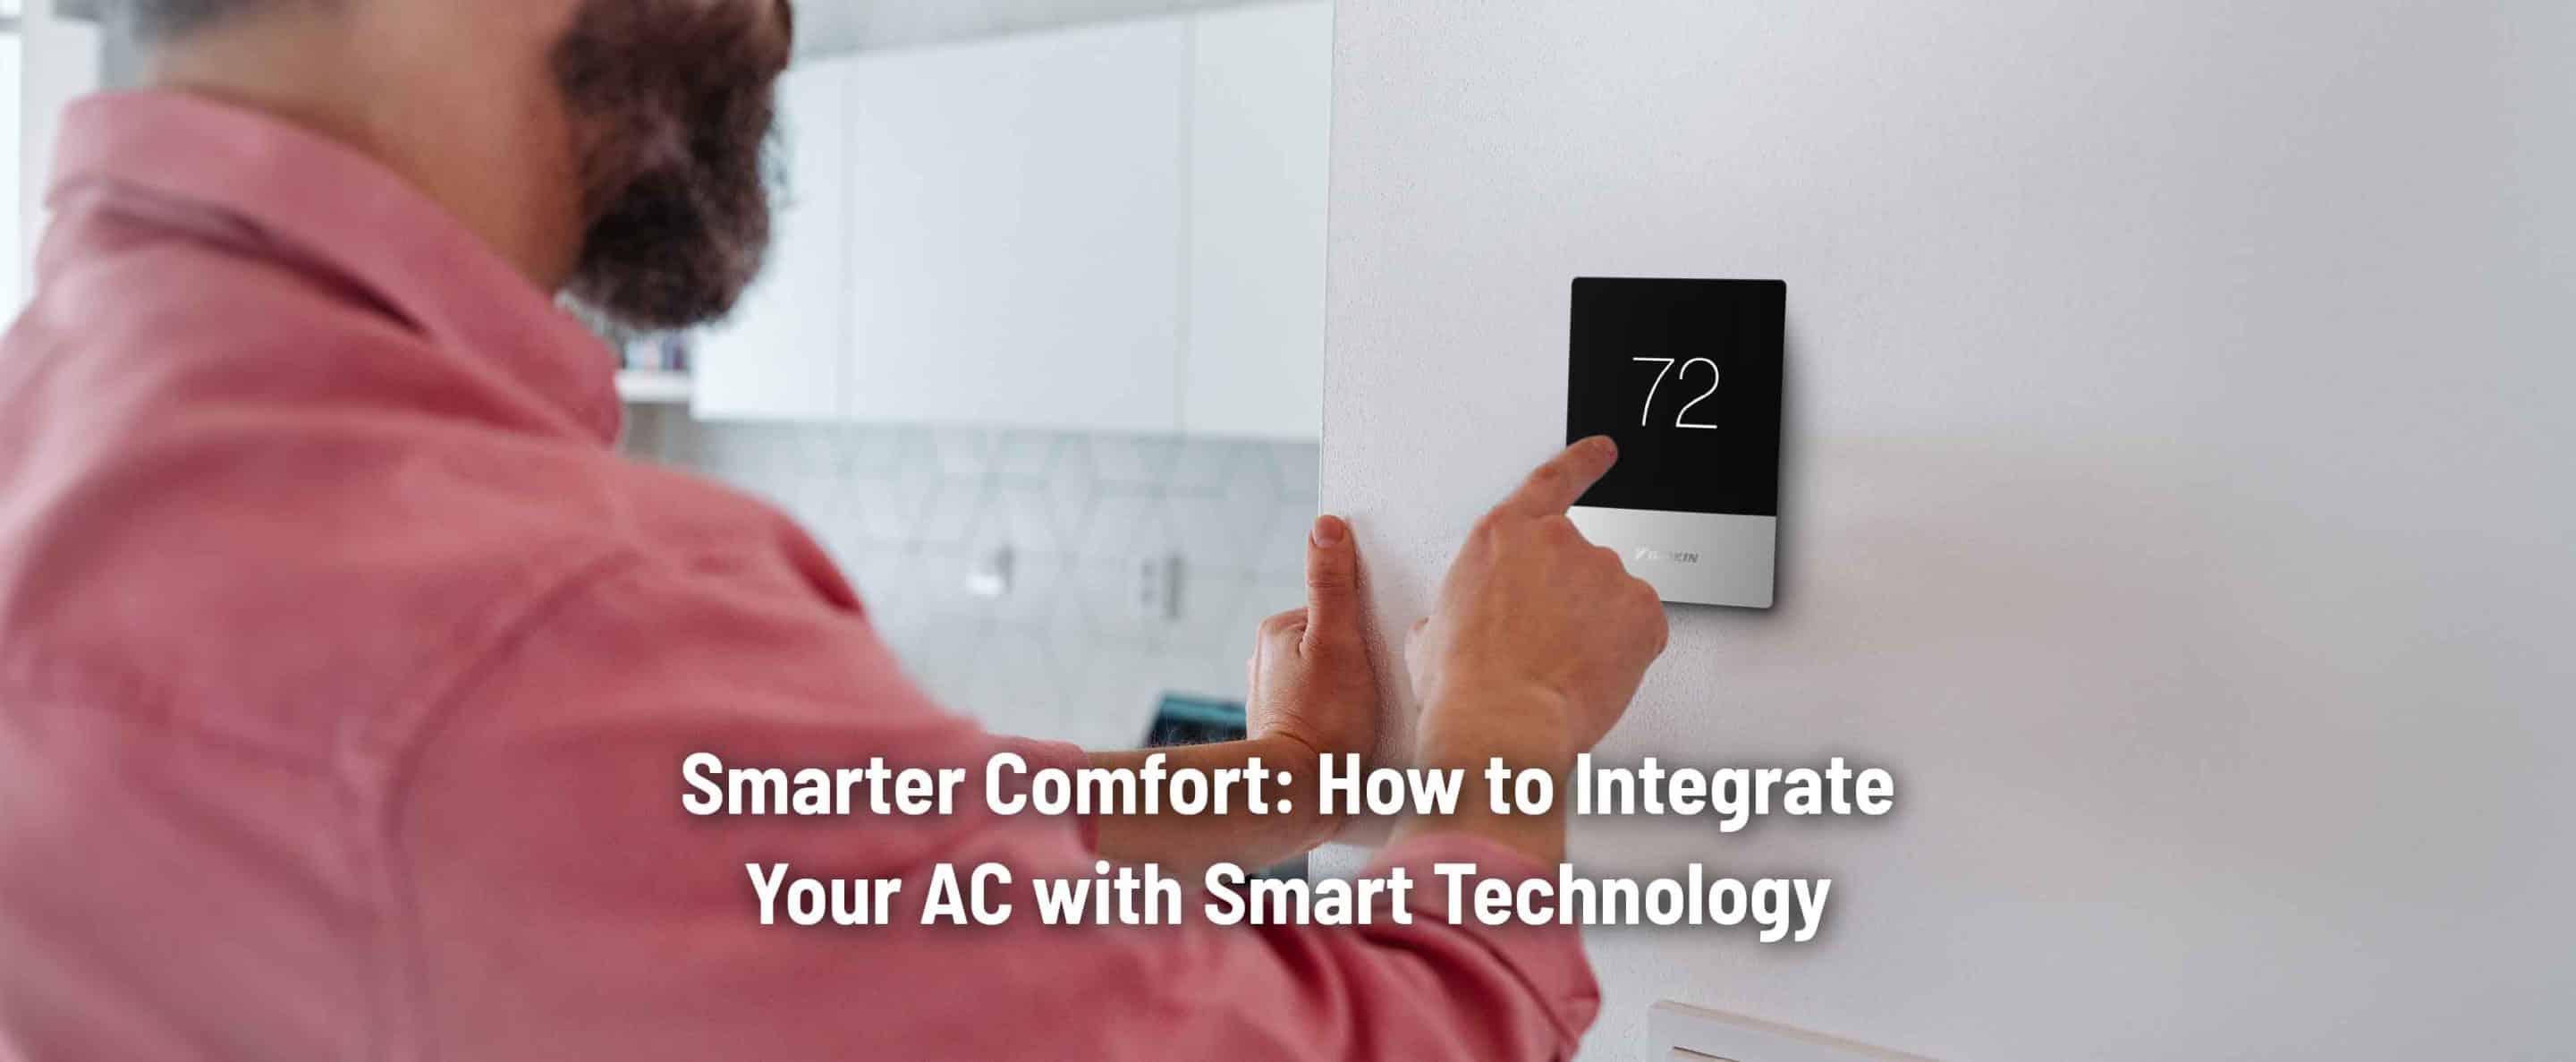 AC smart technology